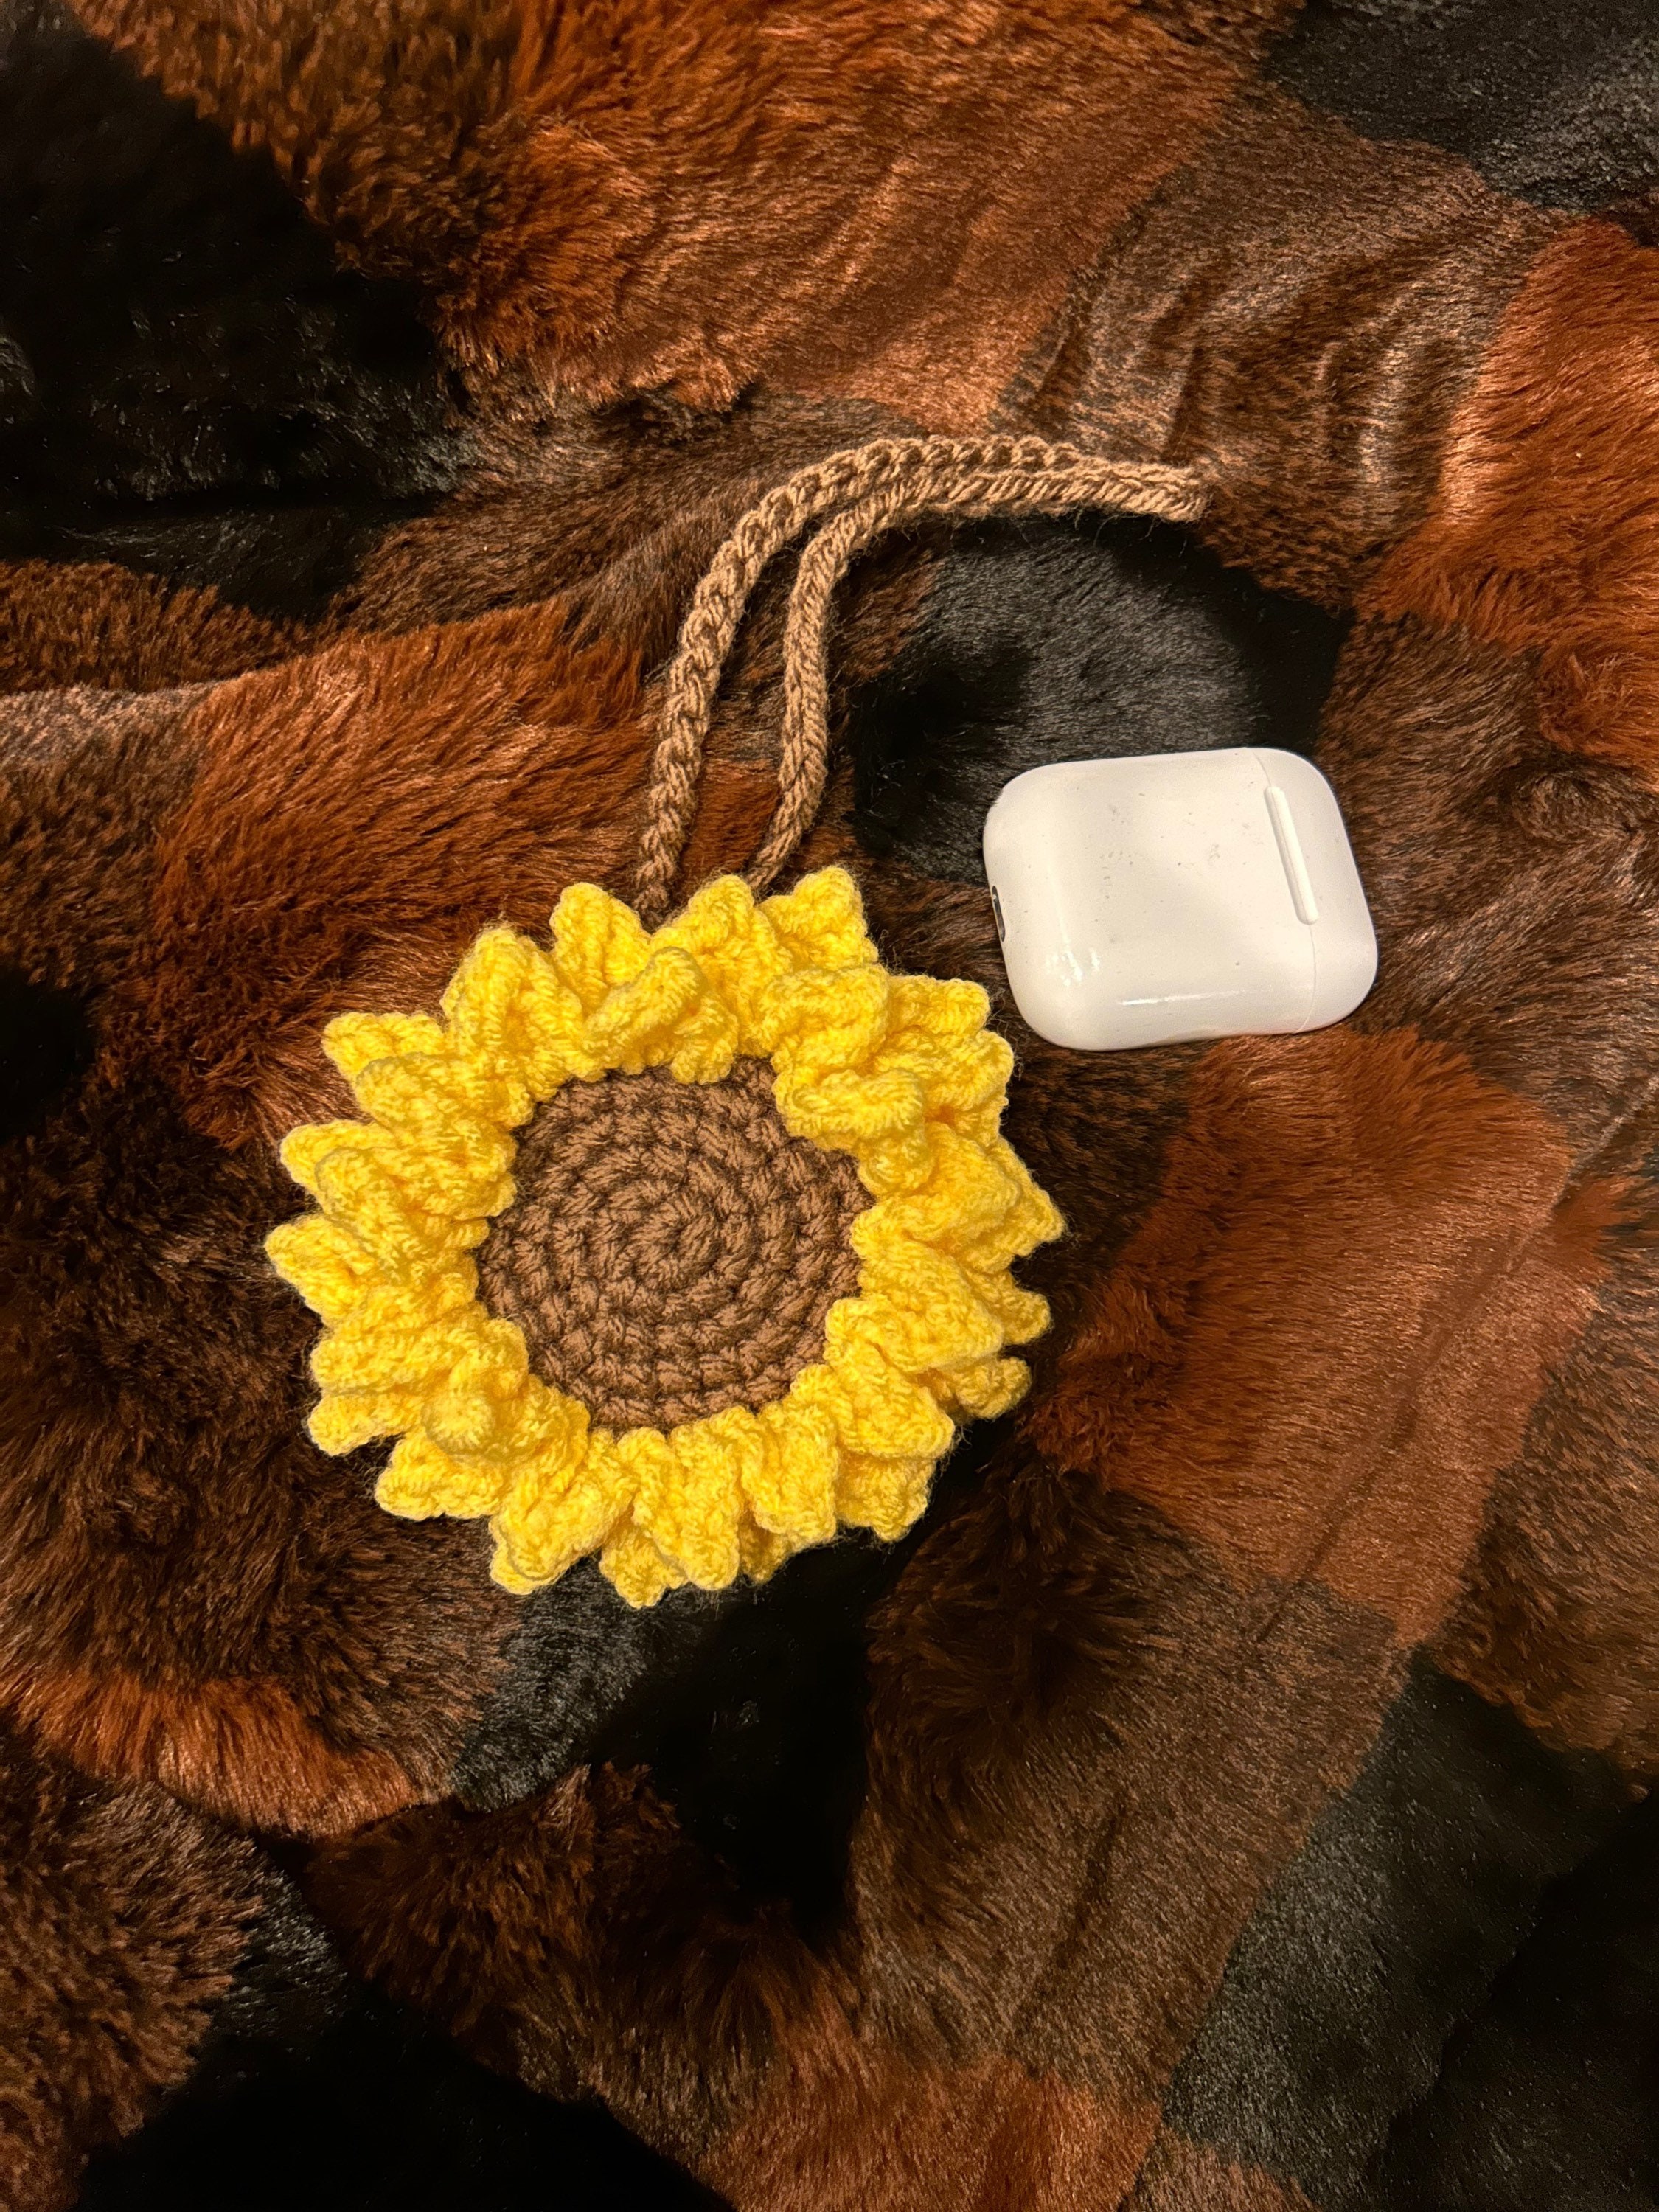 Samoolam Handmade Crochet Boho Bag Charm Key Chain - Green Flower